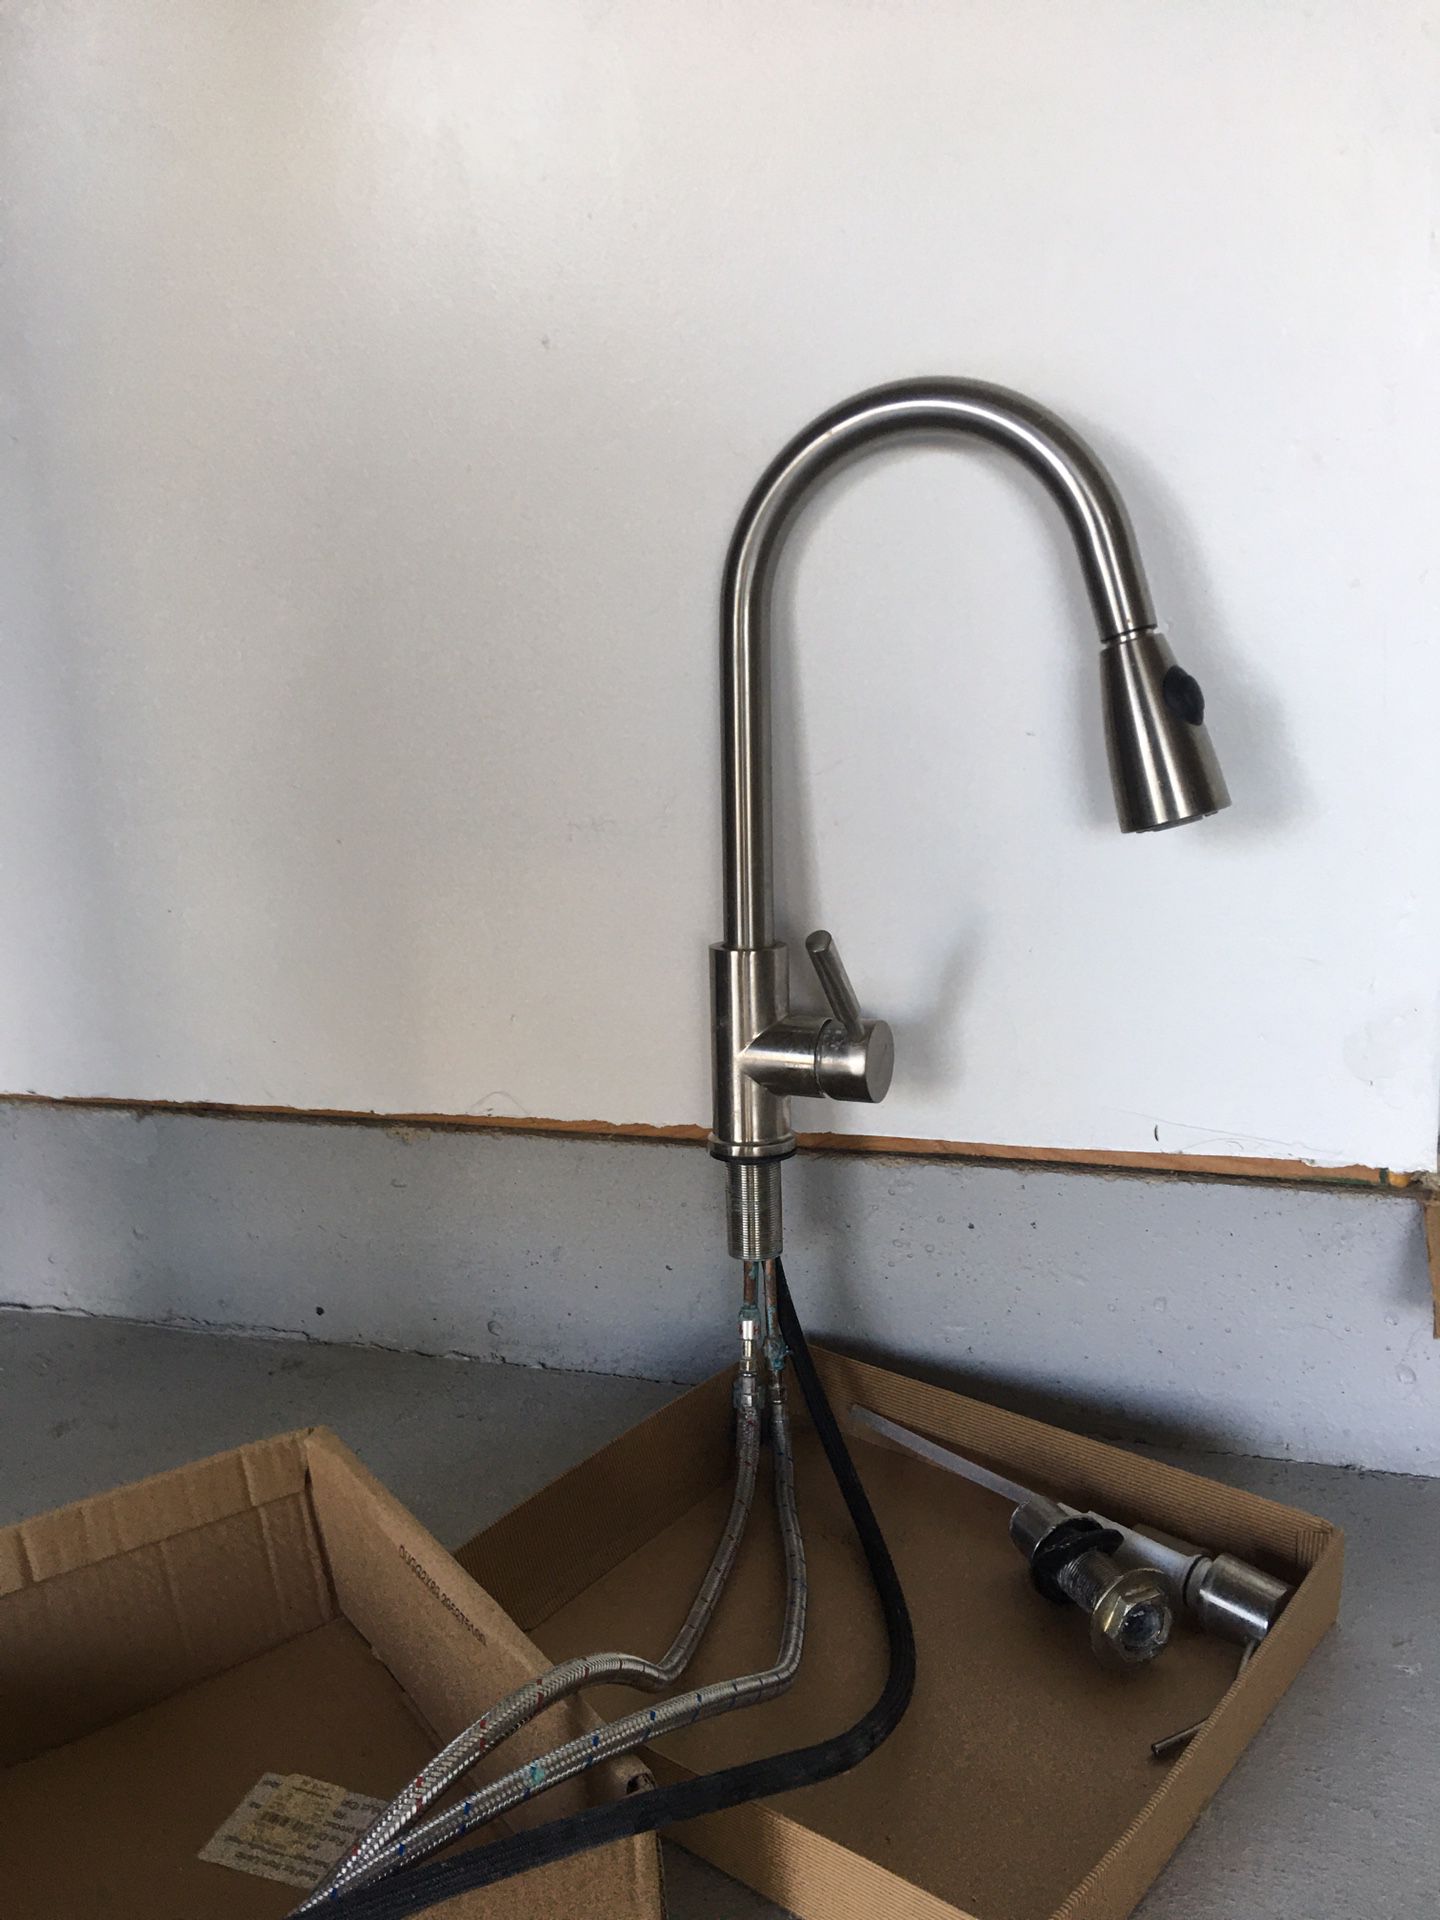 Sink faucet. Kitchen, garage, basement sink stainless steel.